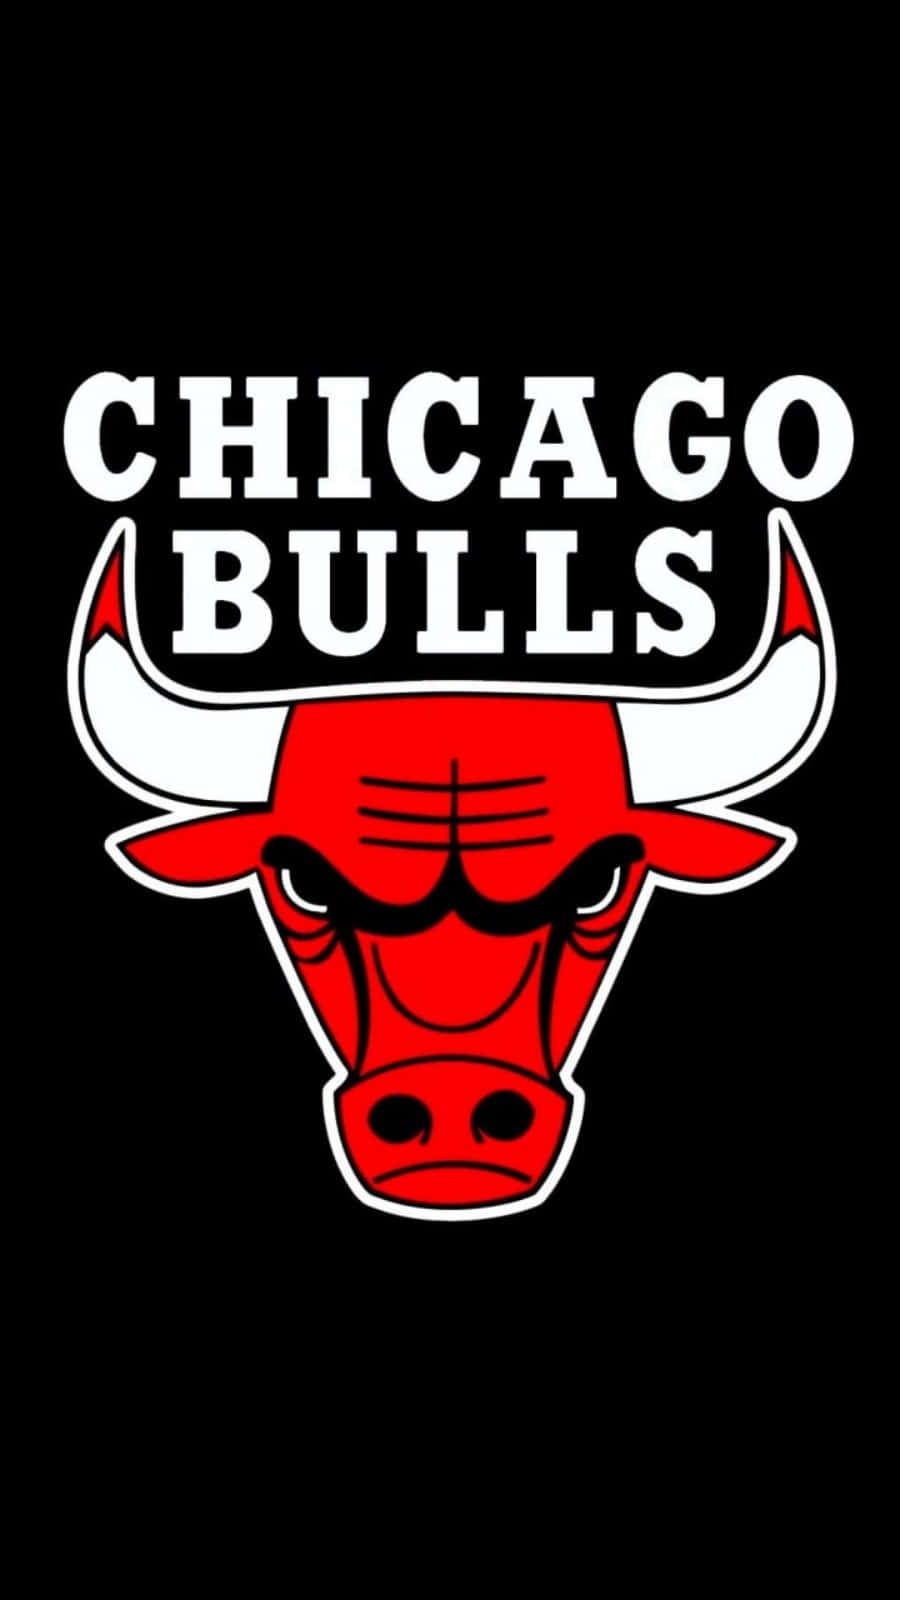 Vis din Chicago Bulls pride på din mobiltelefon! Wallpaper